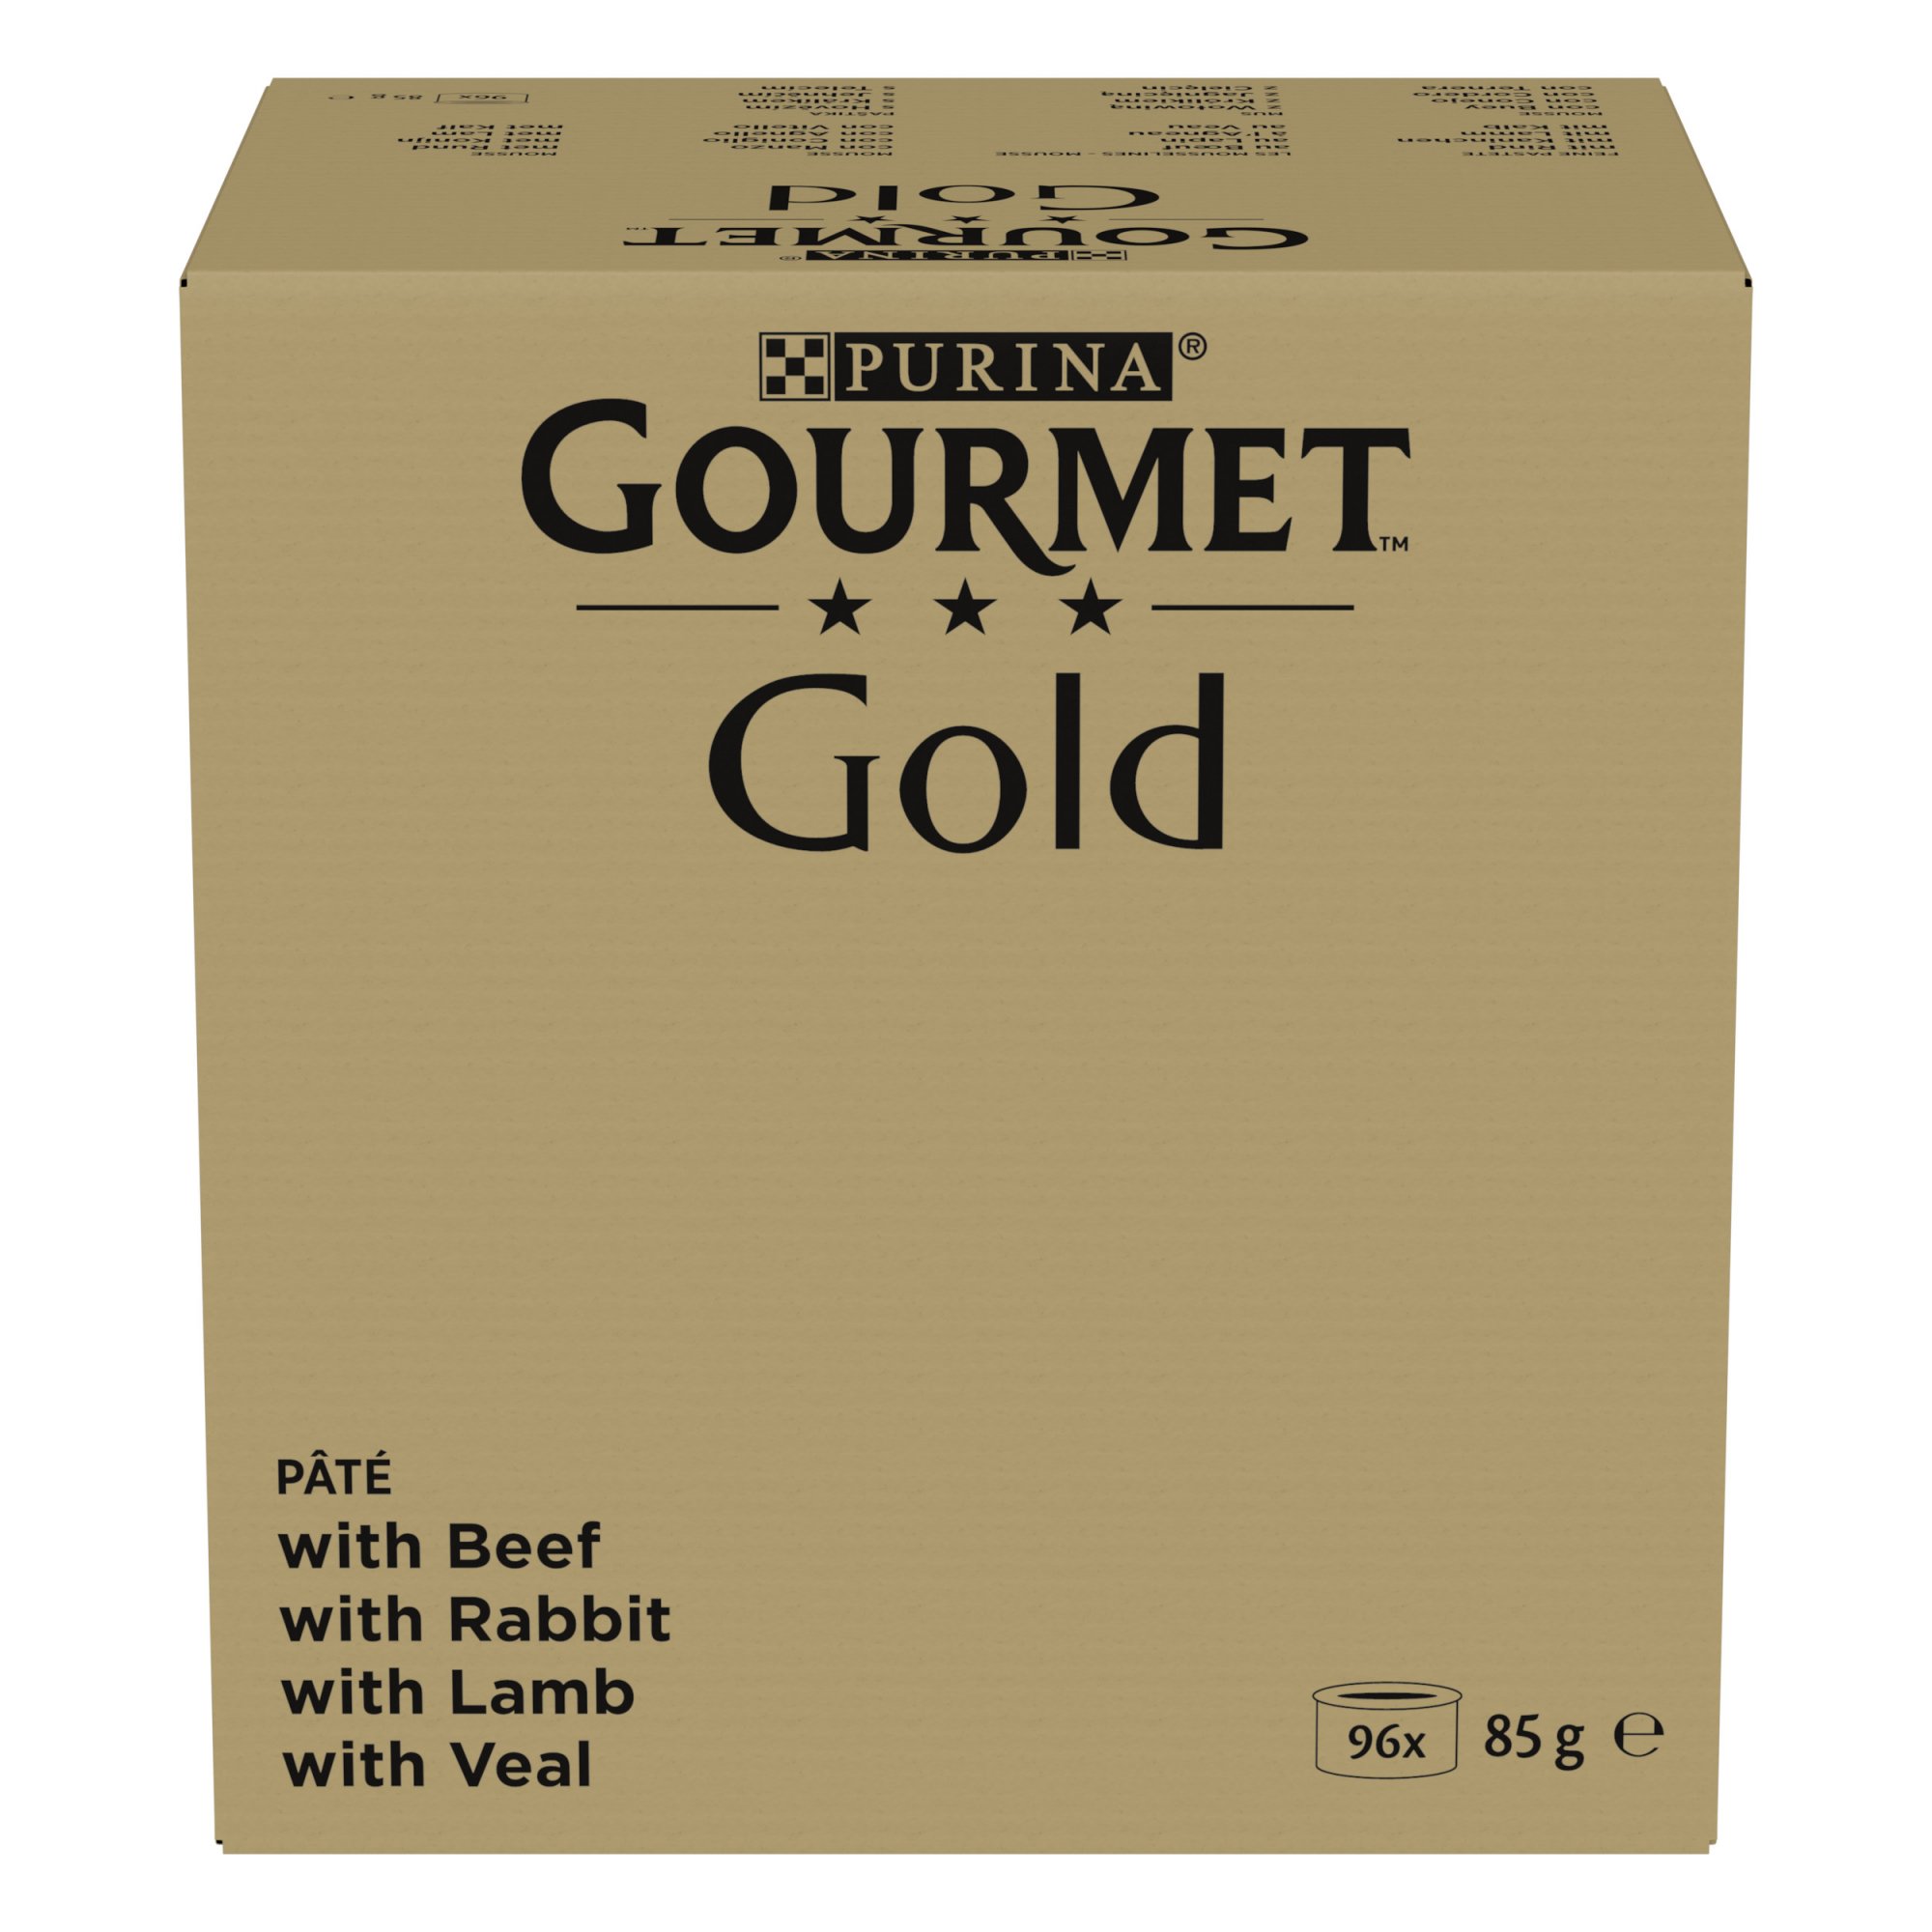 Gourmet Gold Mousselines